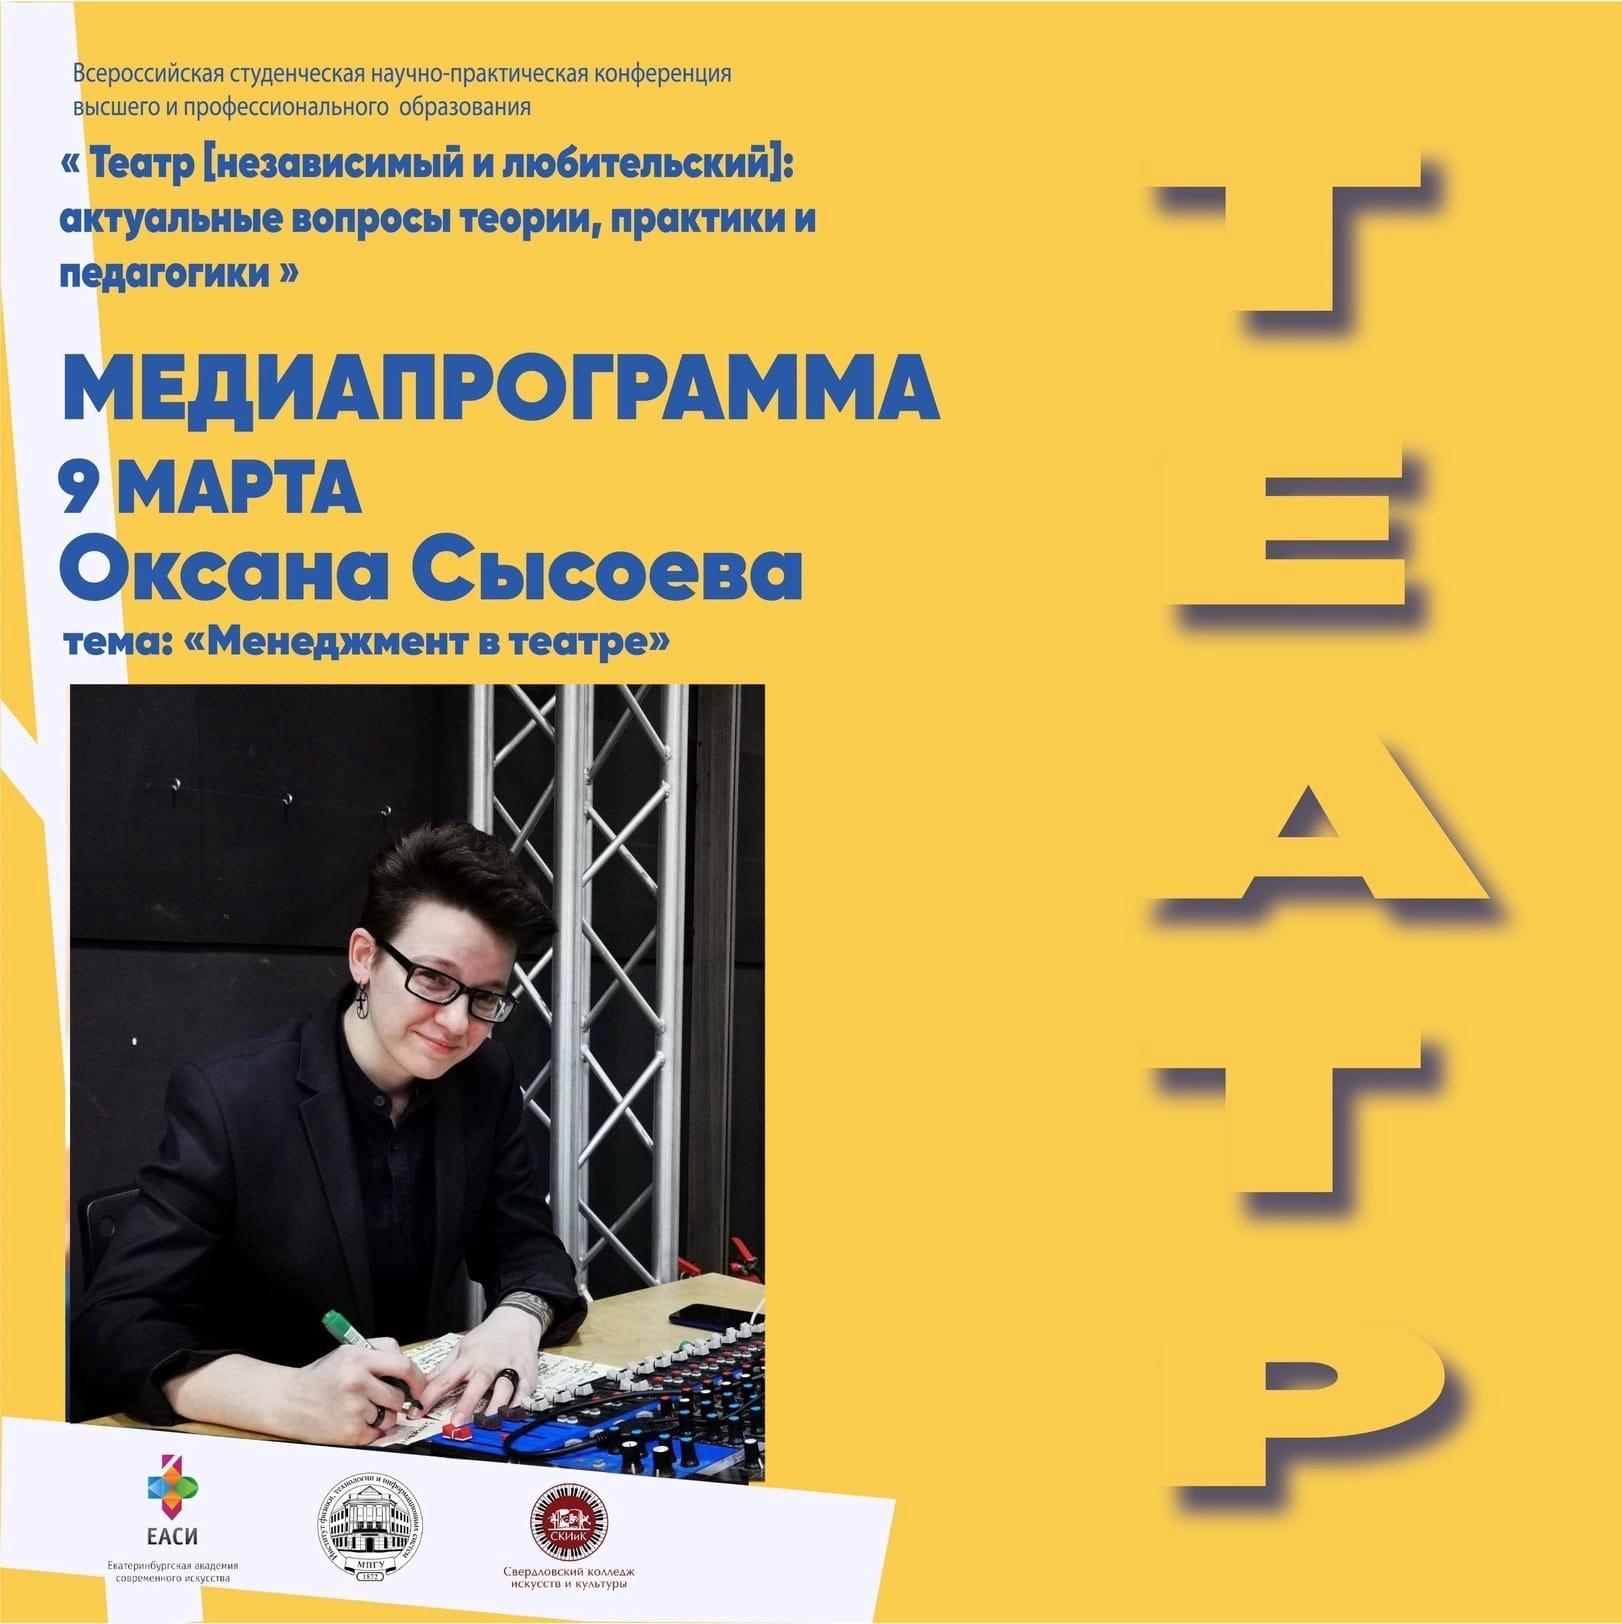 Медиапрограмма конференции: Оксана Сысоева